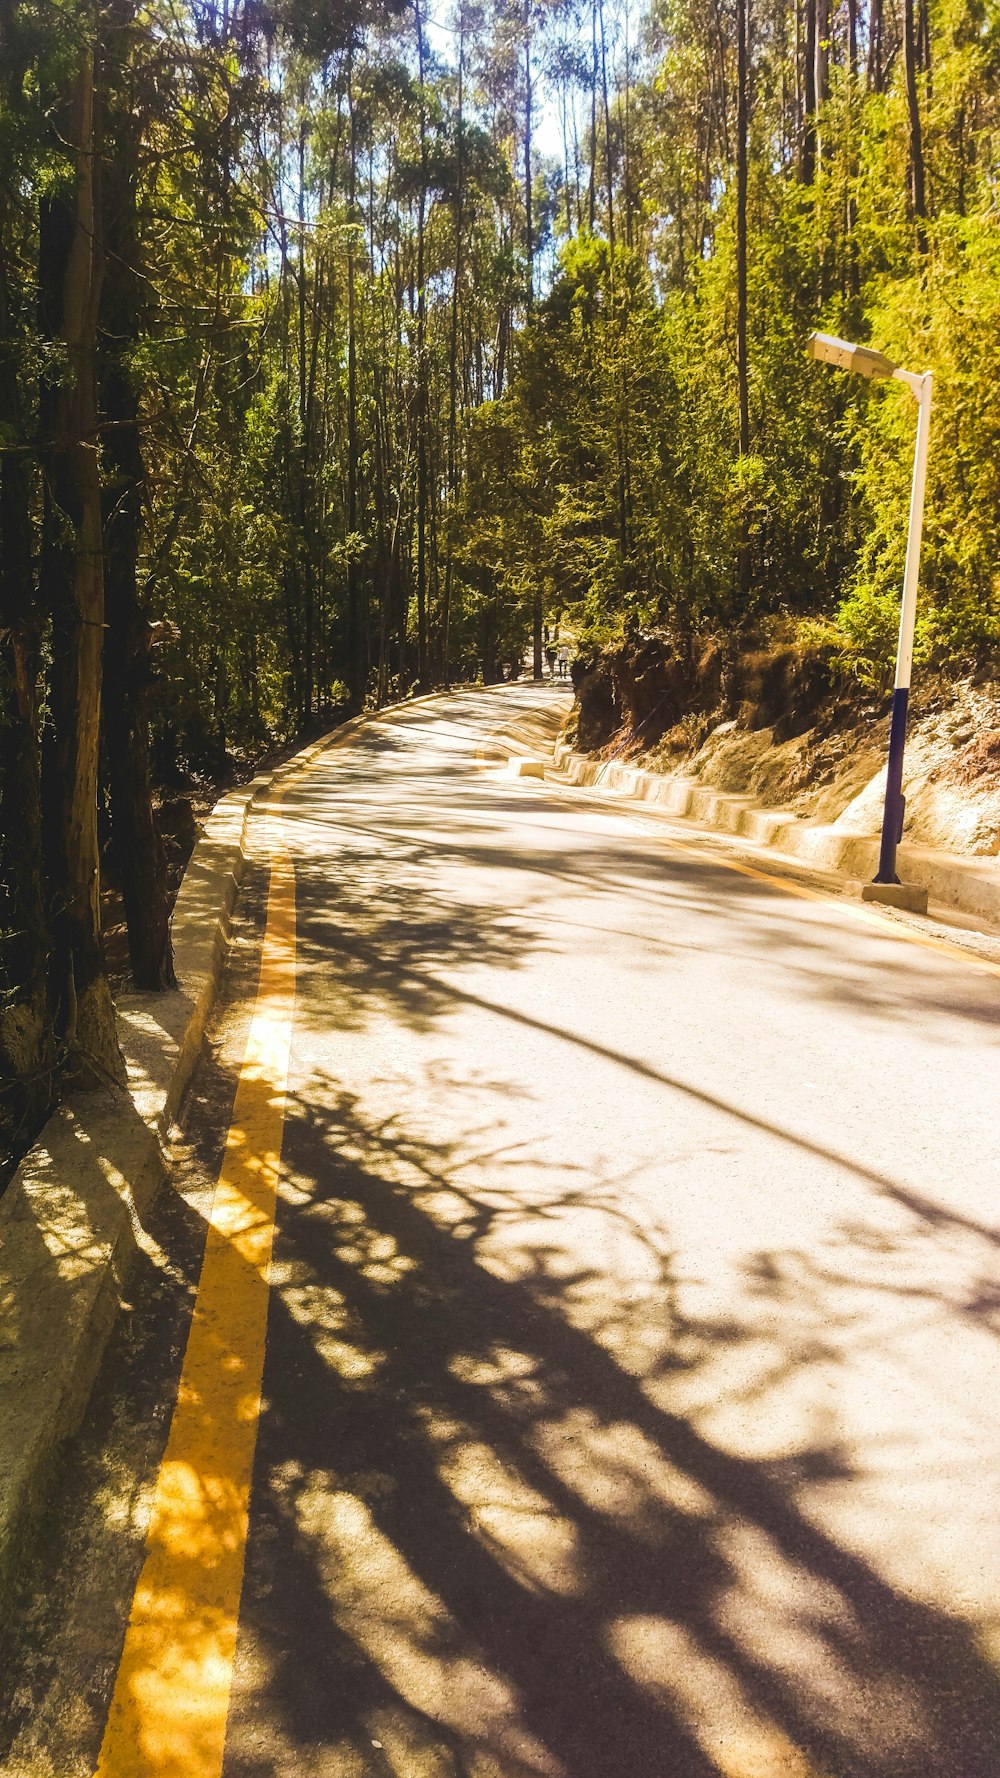 estrada de concreto cinza entre árvores verdes durante o dia